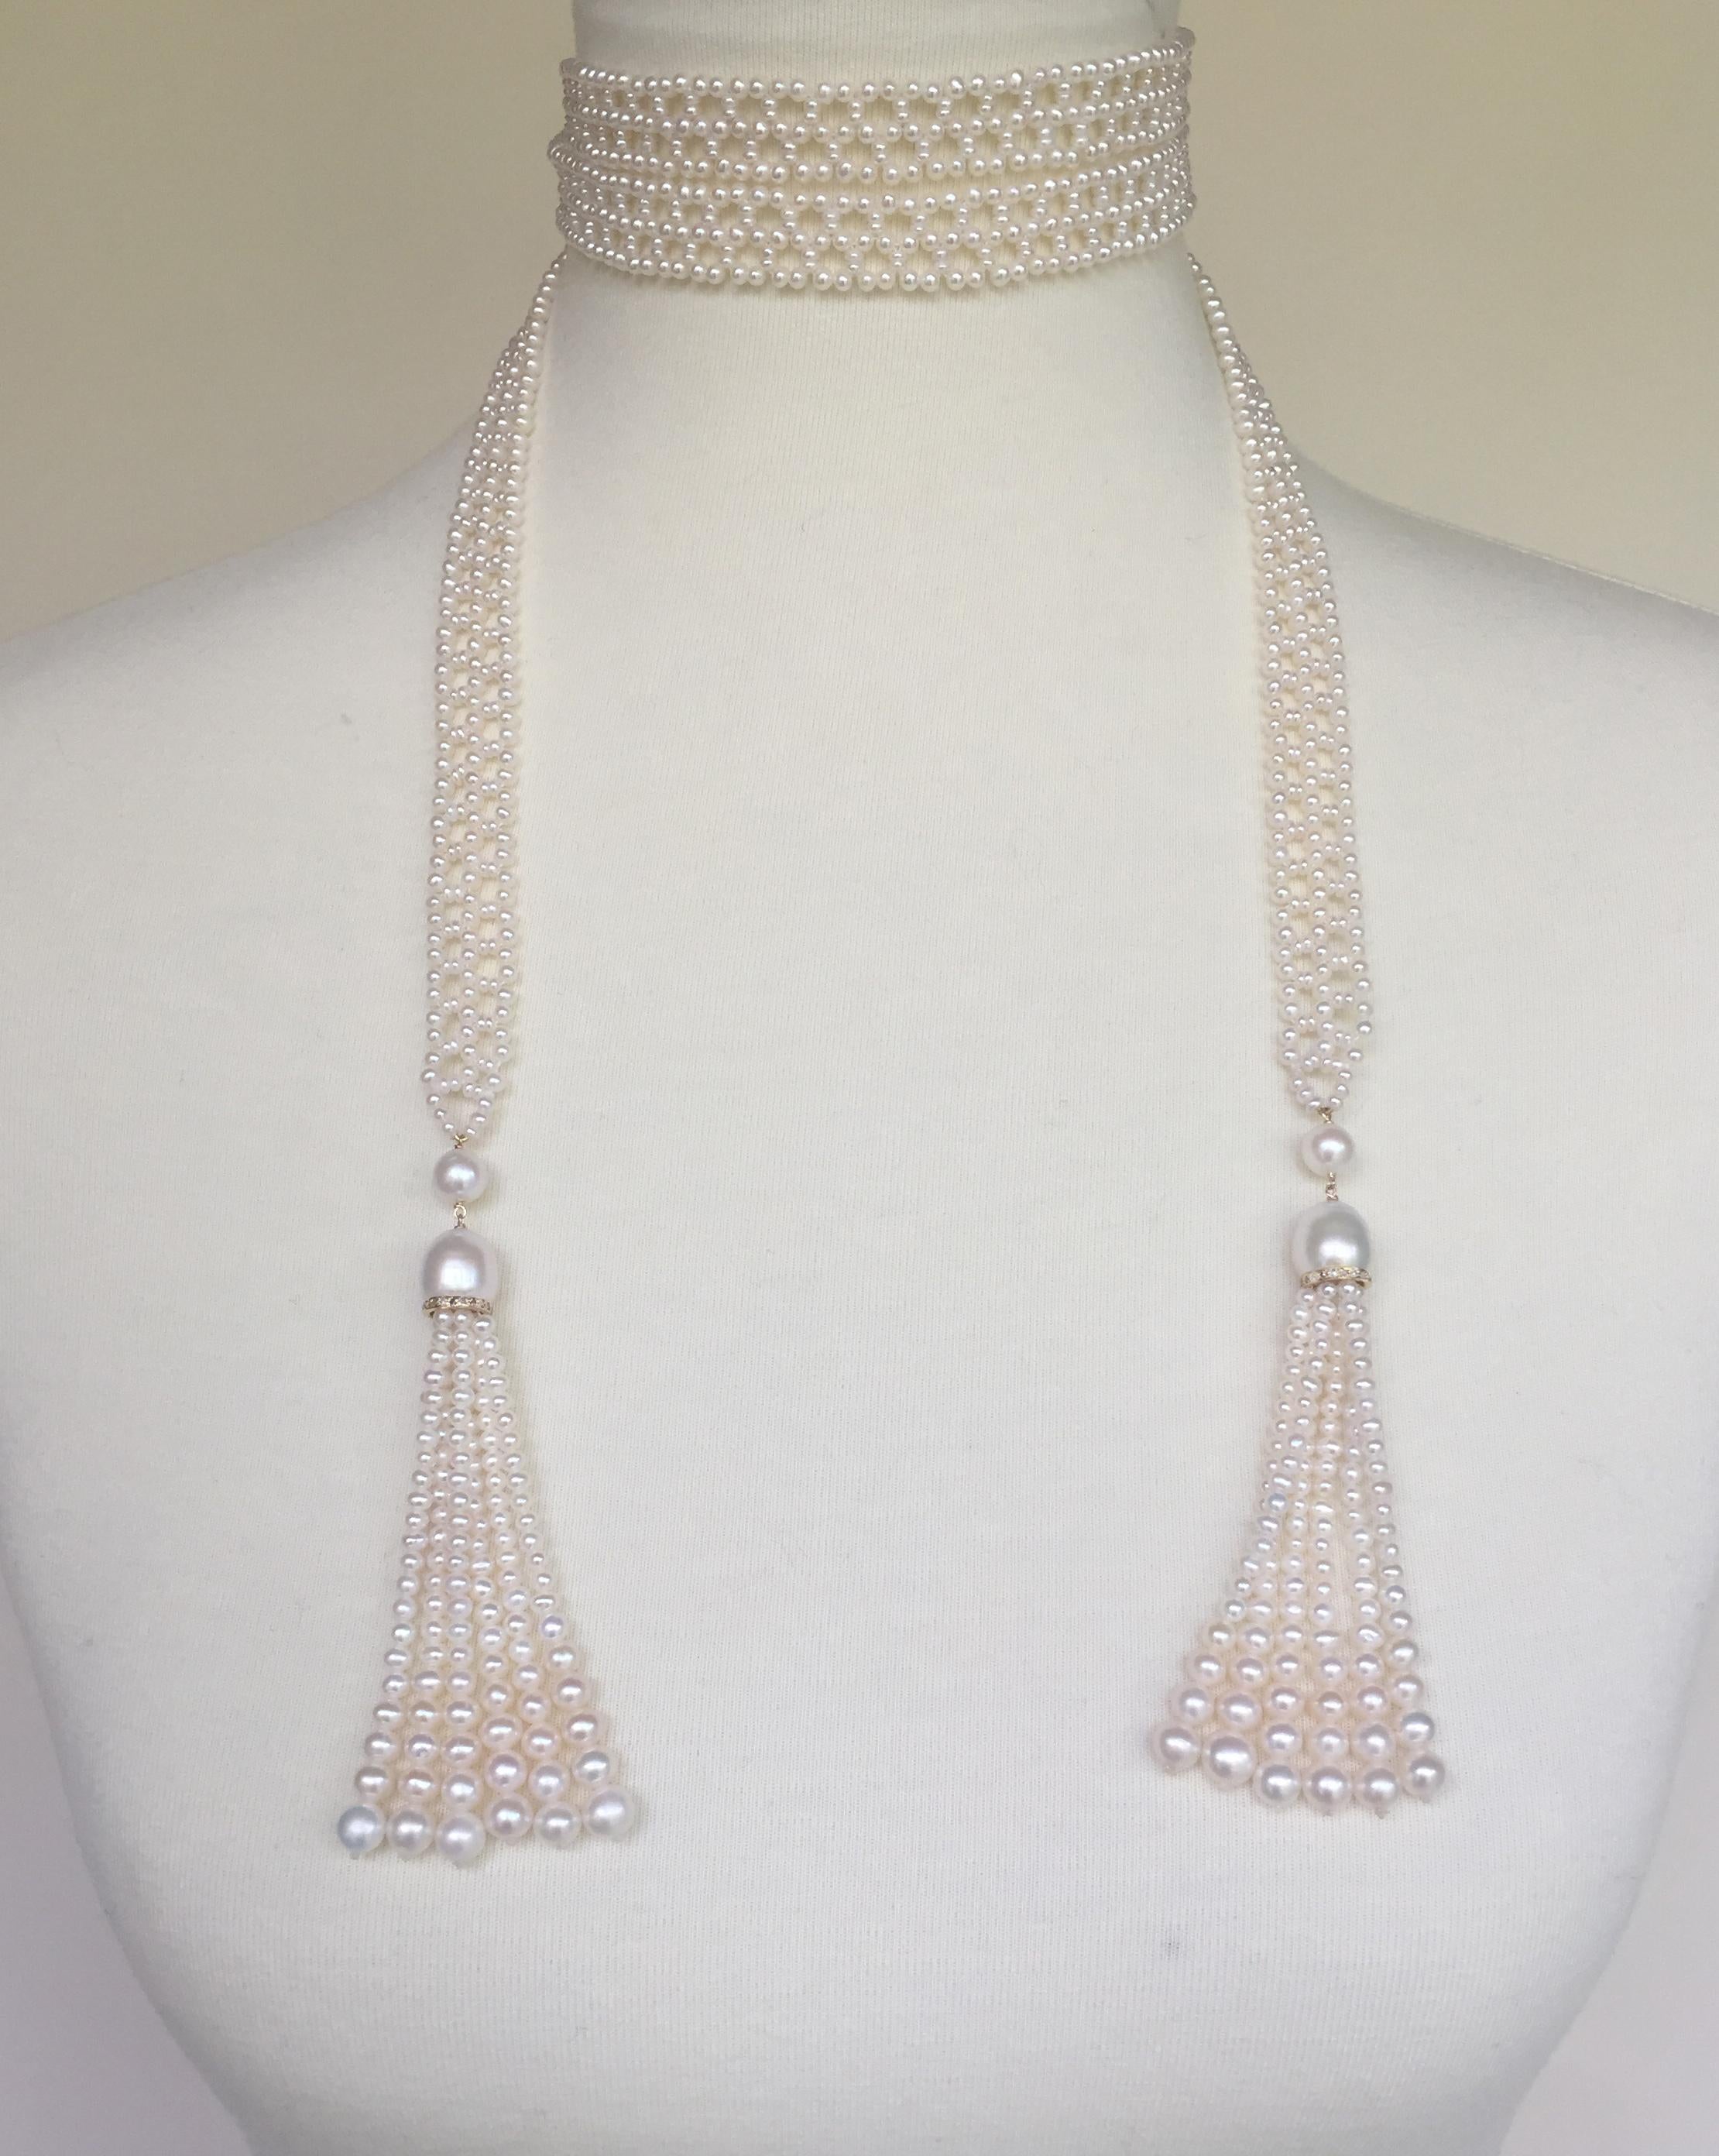 Artist Marina J Woven Pearl Sautoir Necklace with Diamonds and 14 K God Tassels